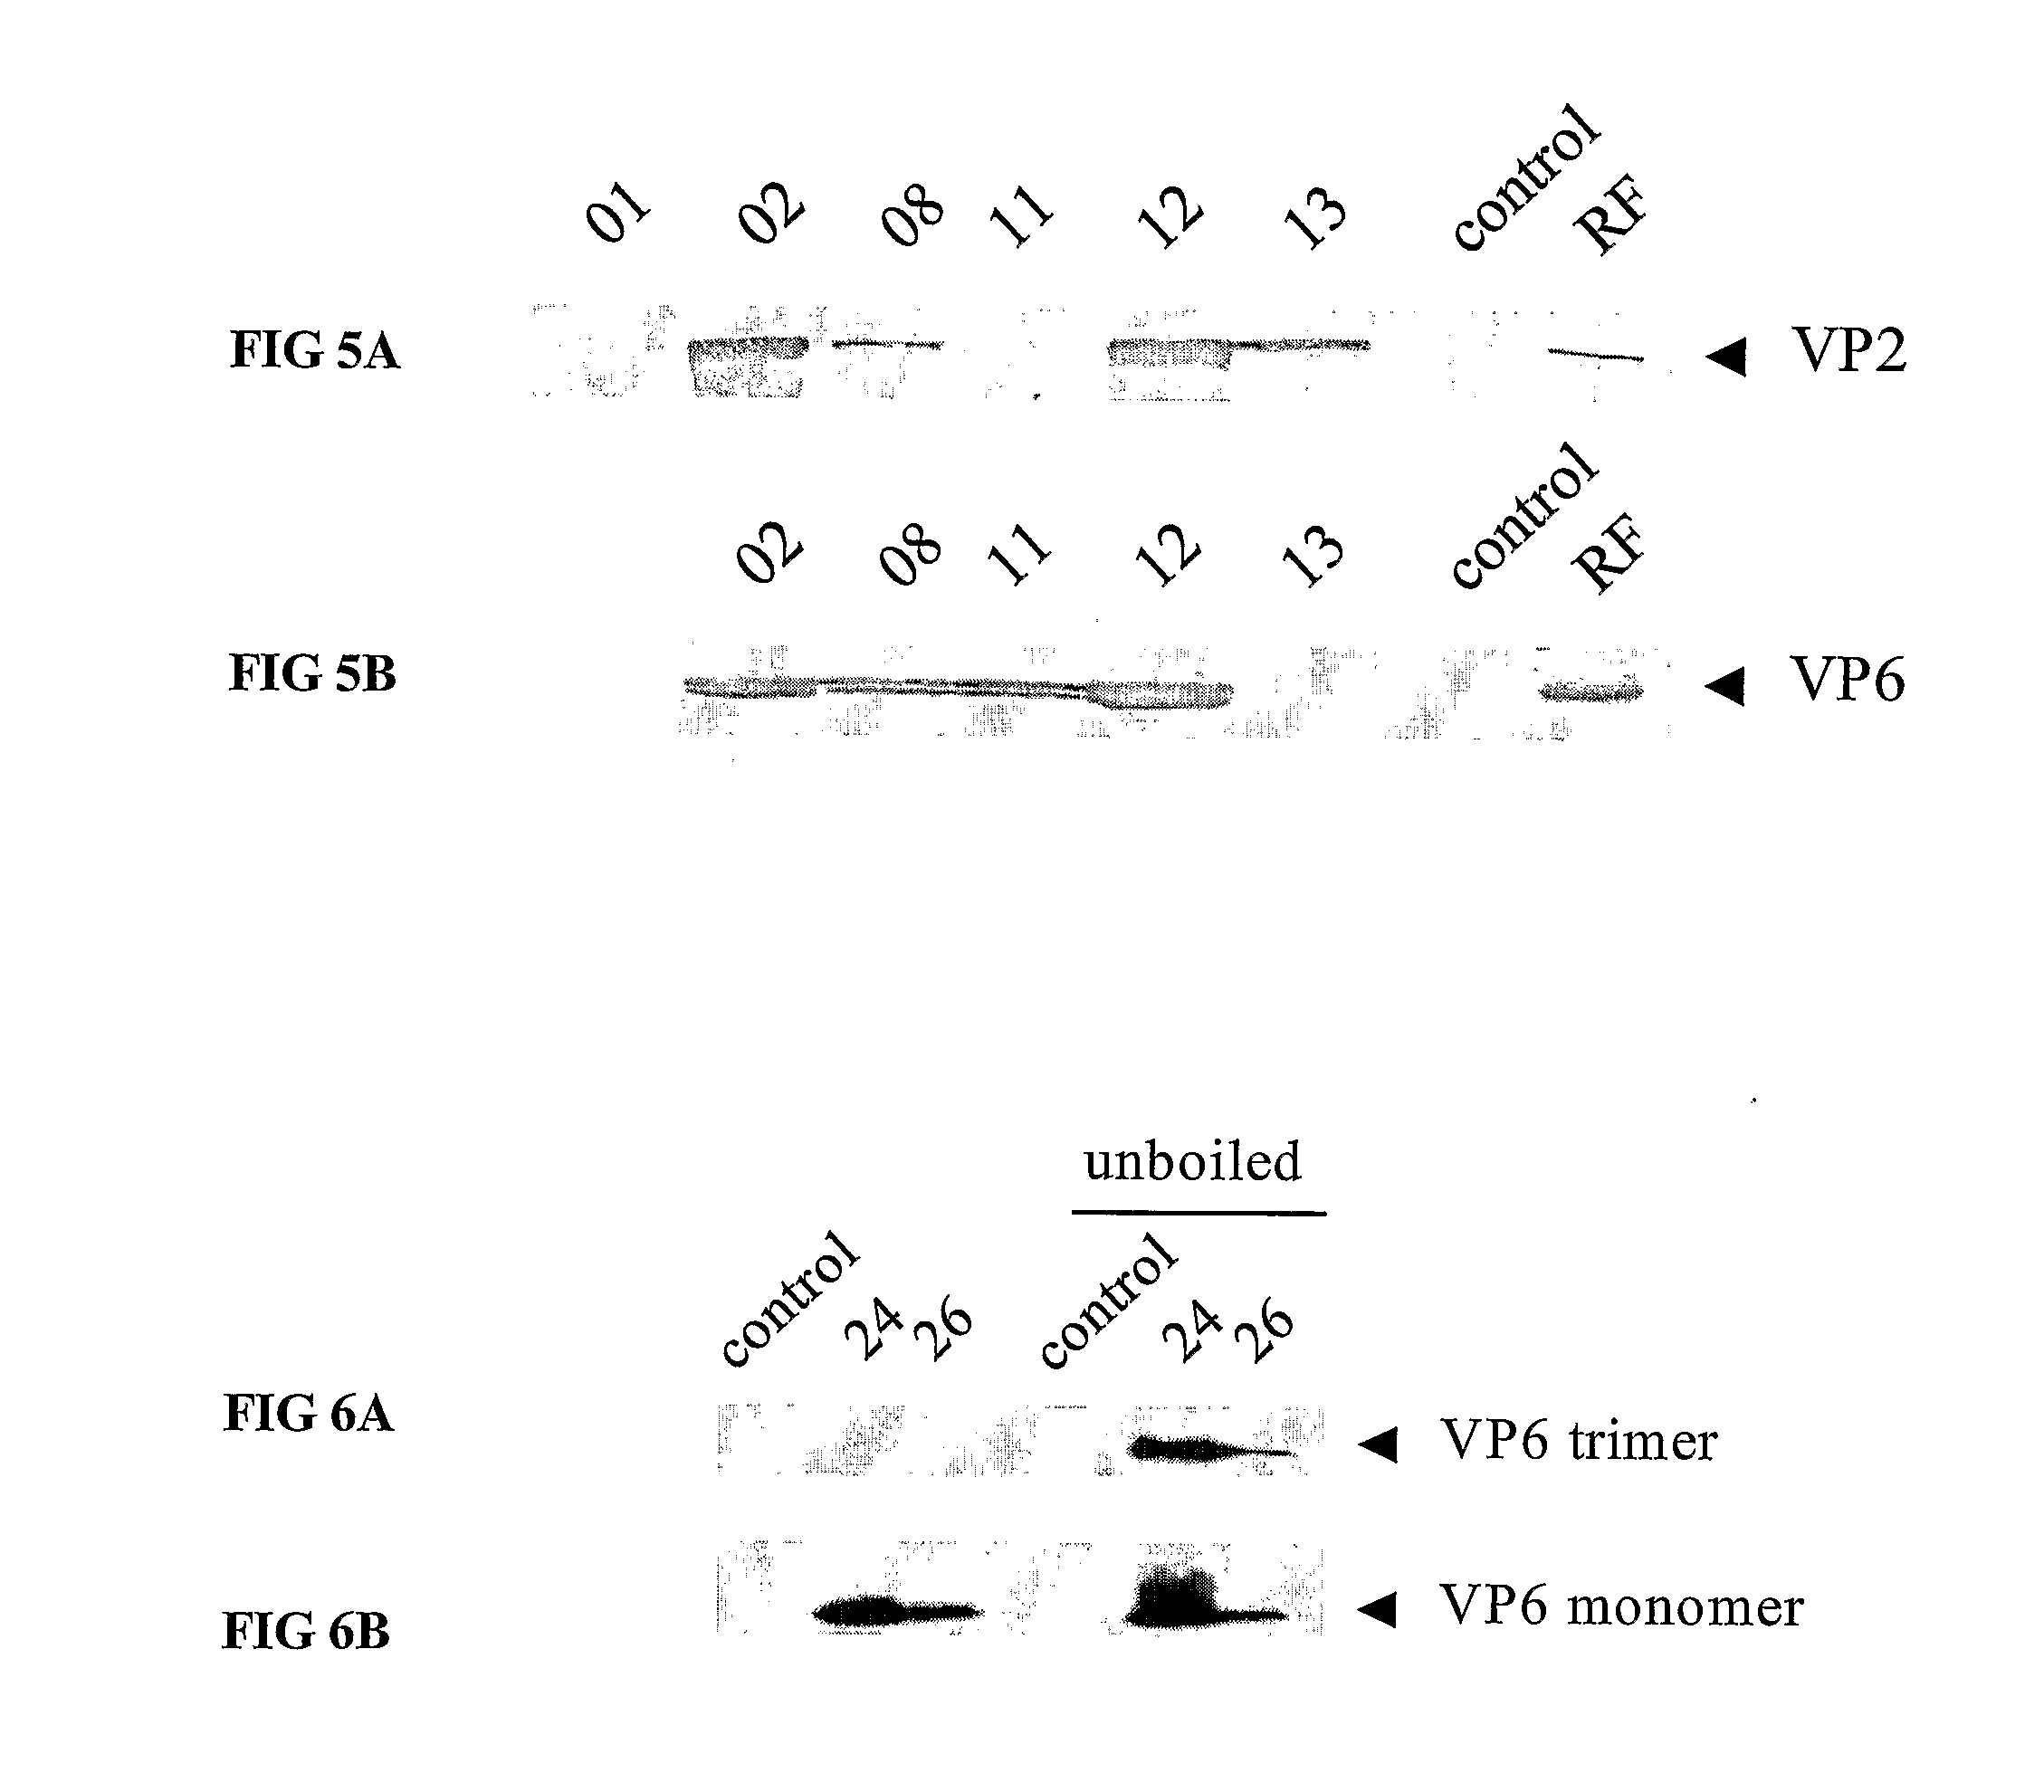 Preparation of recombinant rotavirus proteins in milk of transgenic non-human mammals